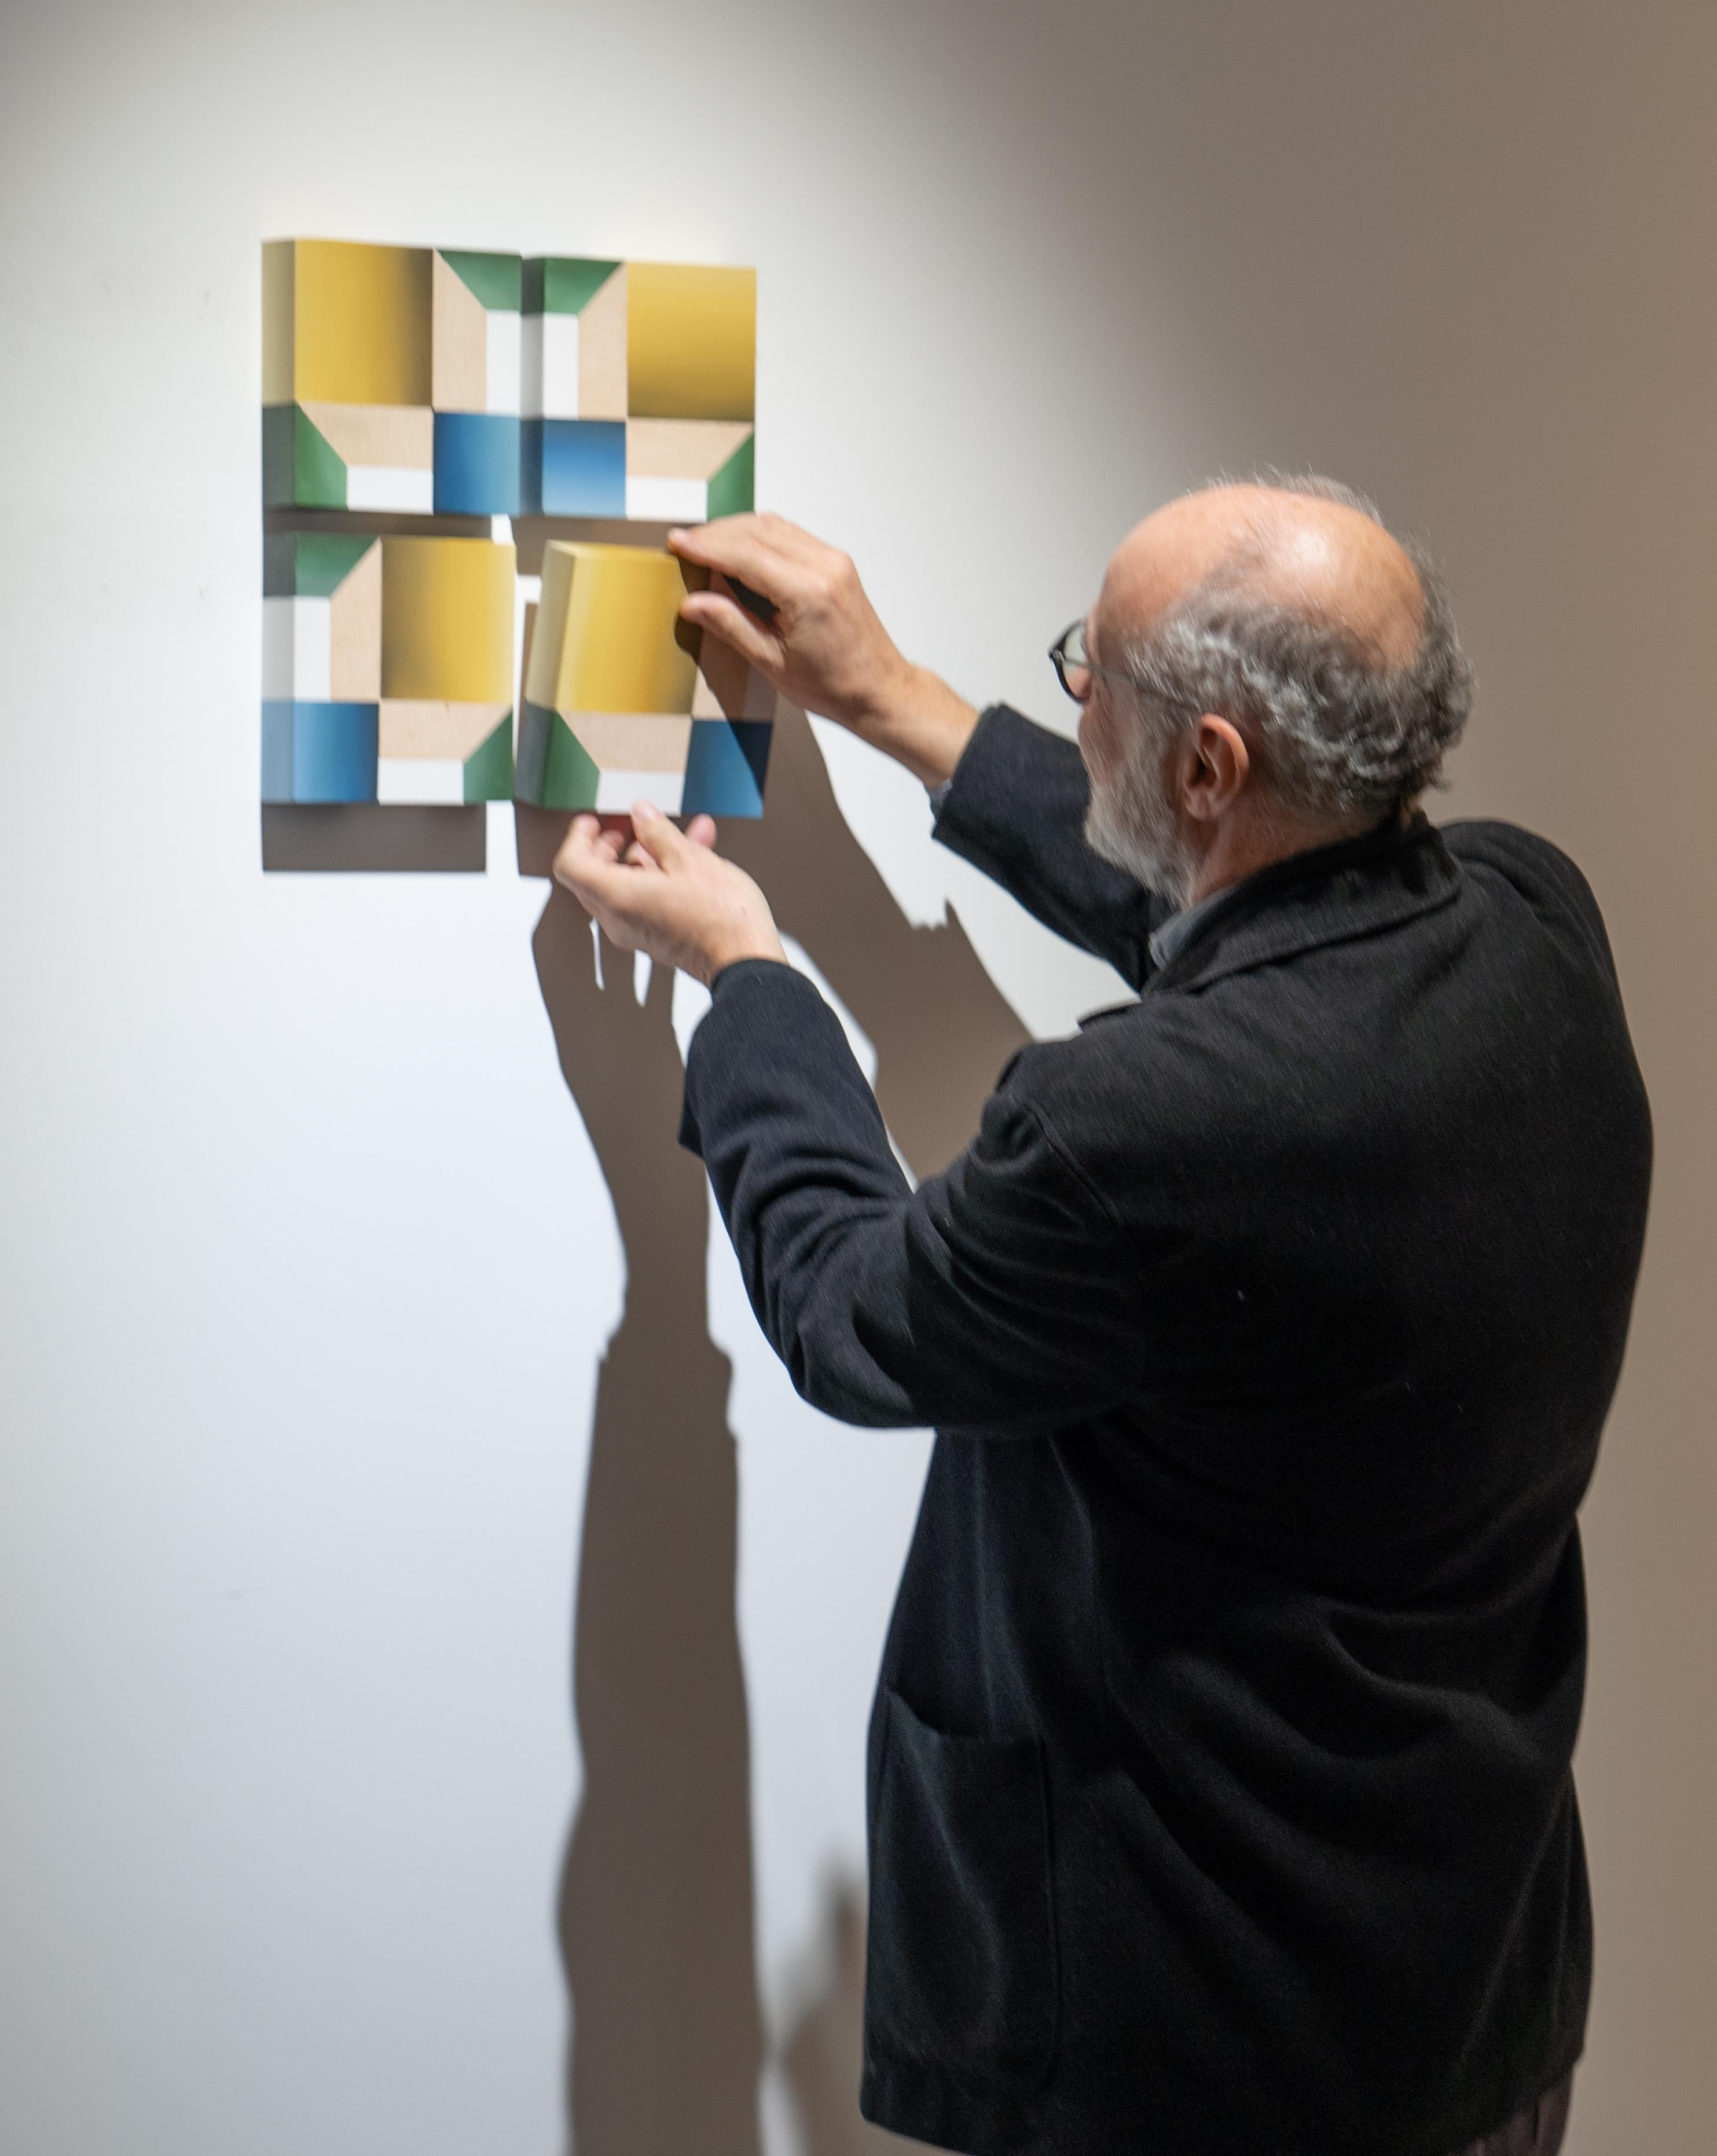 Geometric-Kaleidoscopic 1 - 21st Century, Oil painting, Geometric Abstraction - Abstract Geometric Painting by Víctor Pérez-Porro